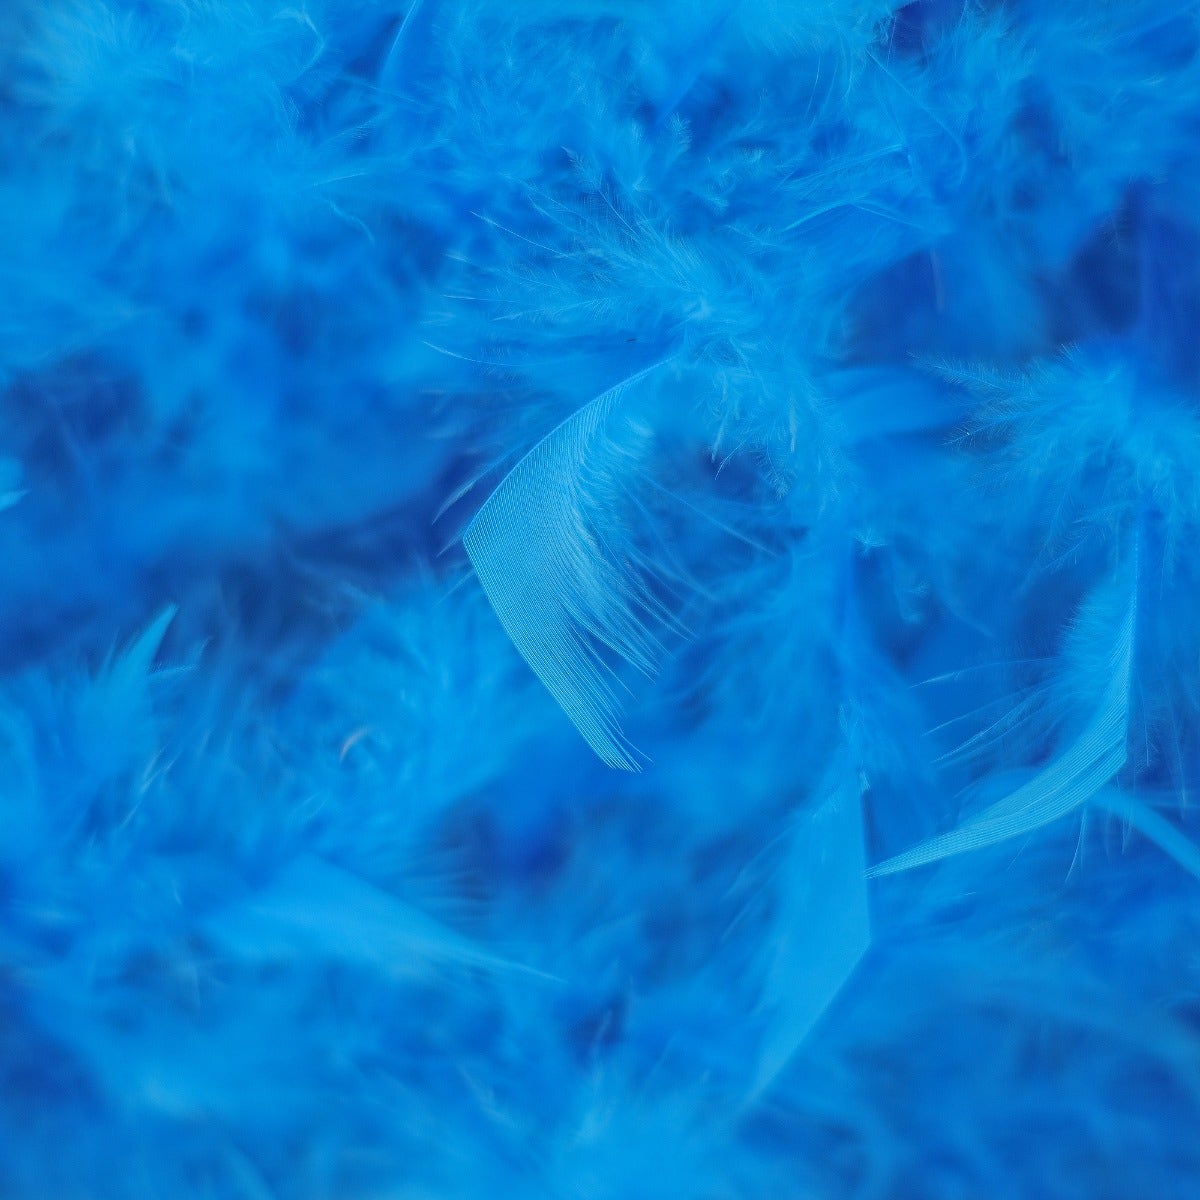 Chandelle Feather Boa - Medium Weight - Dark Turquoise